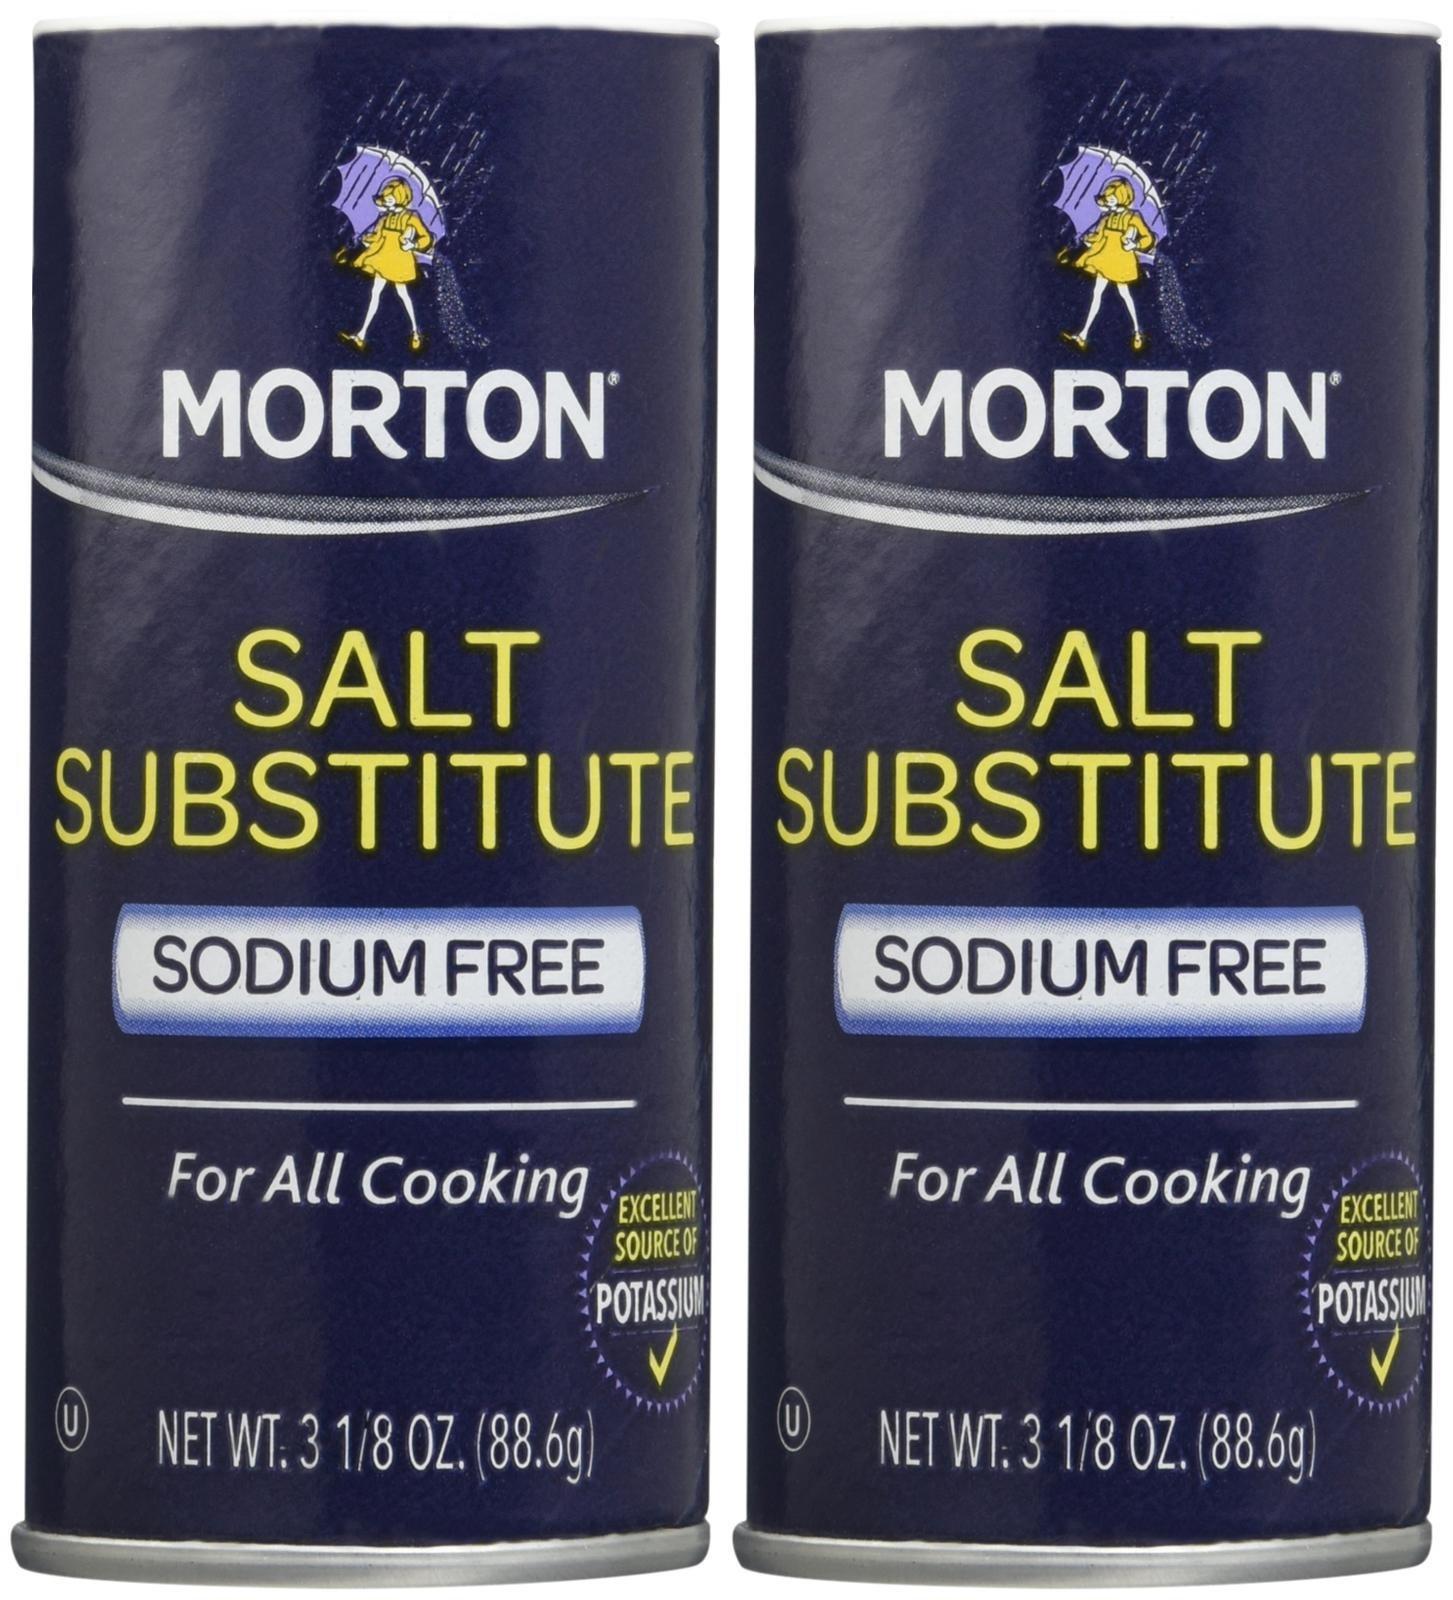 Also Salt Salt Substitute 2.5 oz